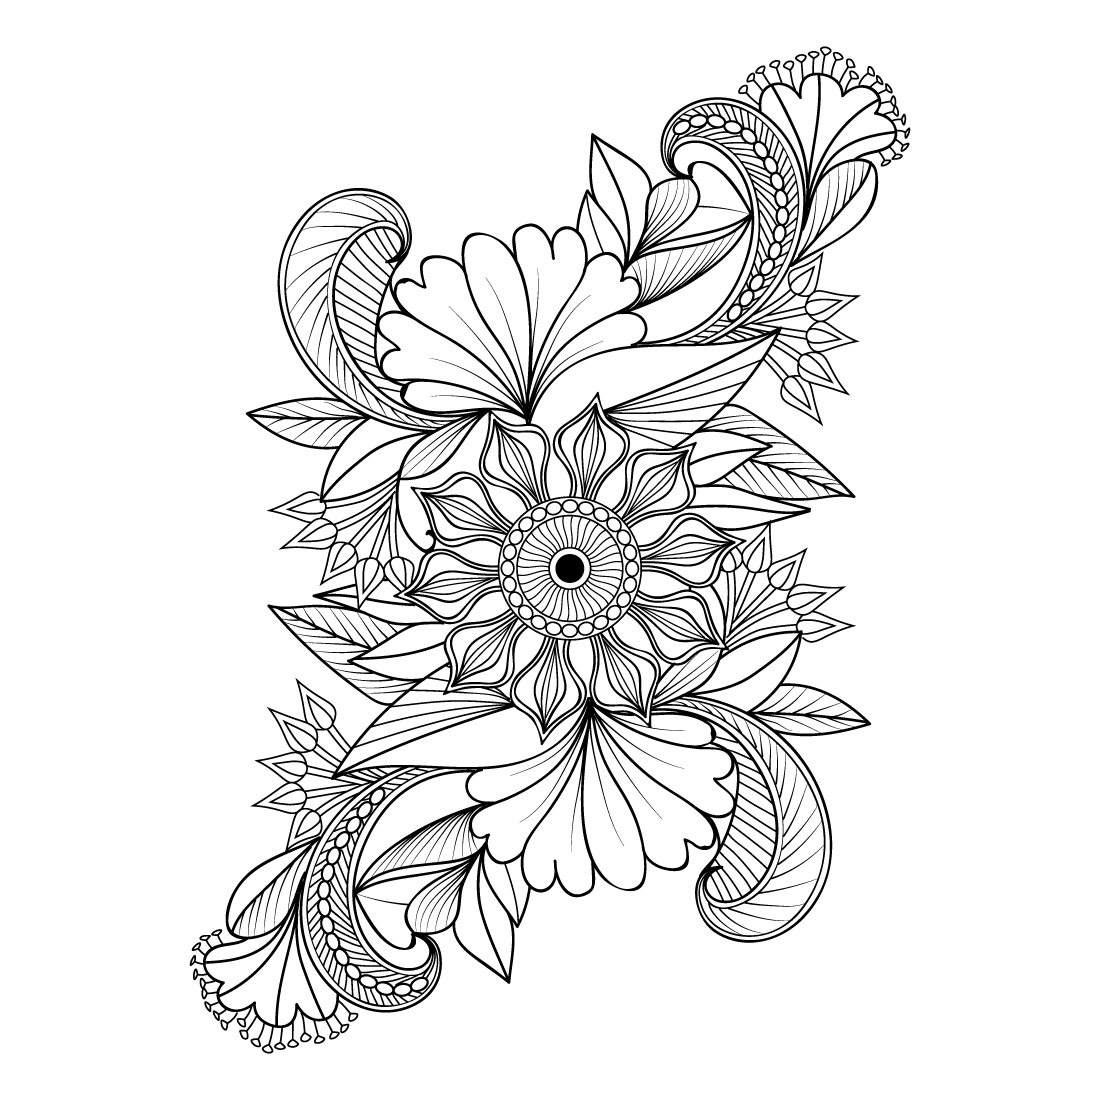 Doodle flower art, doodle flower art drawing, doodle flower drawing, flower  drawing doodle art zentangle art, doodle flower coloring pages. -  MasterBundles